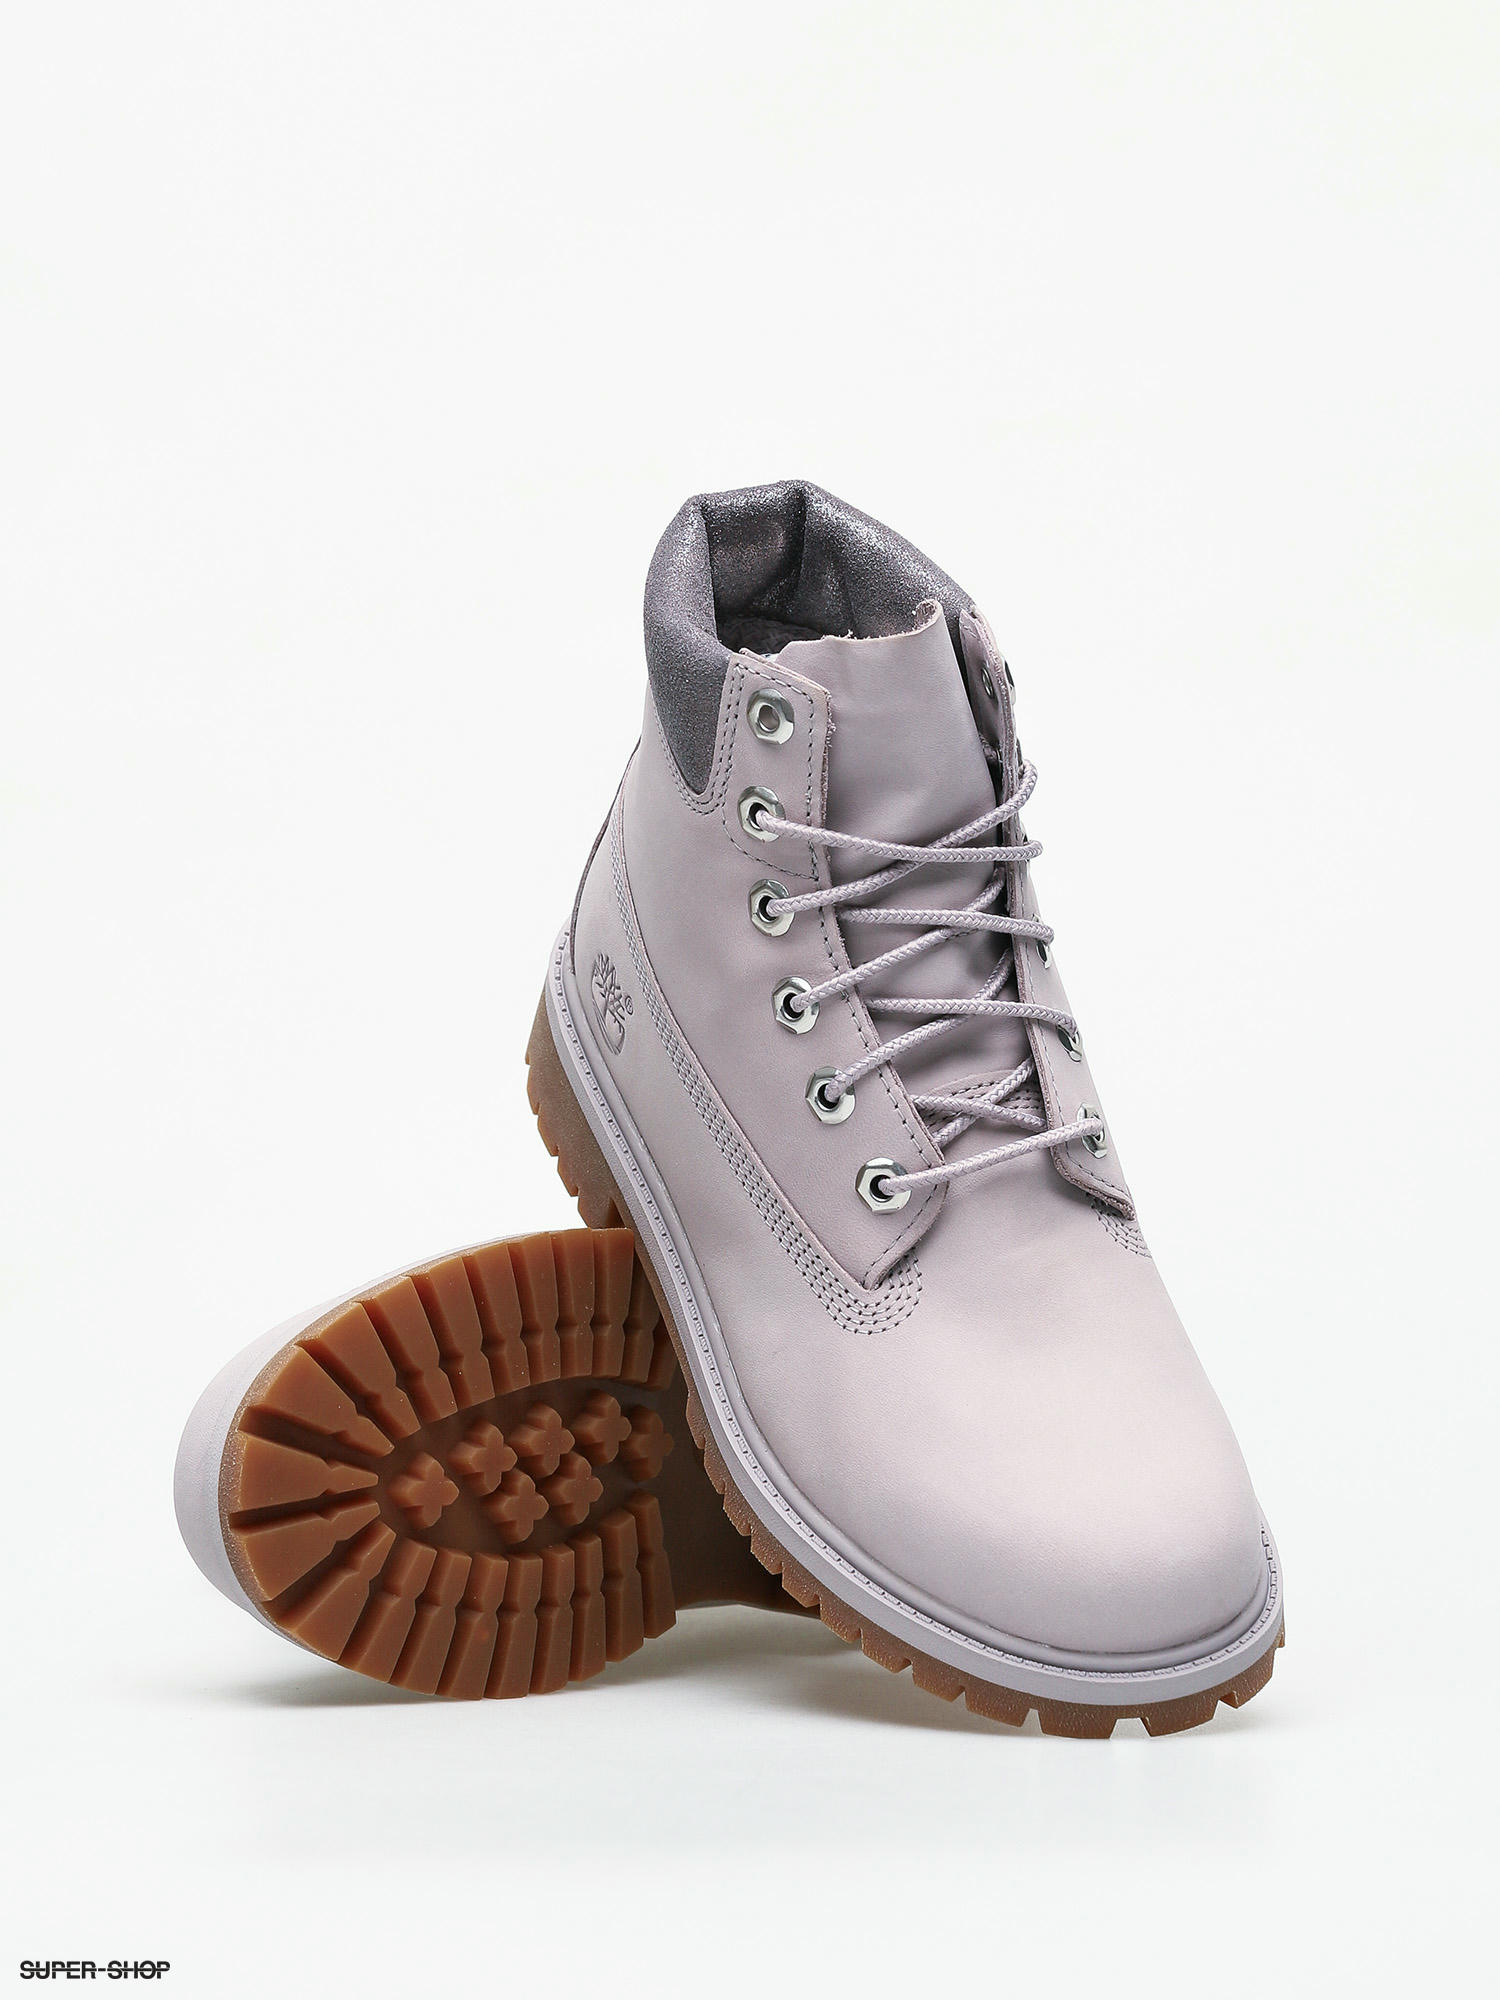 grey nubuck timberland boots